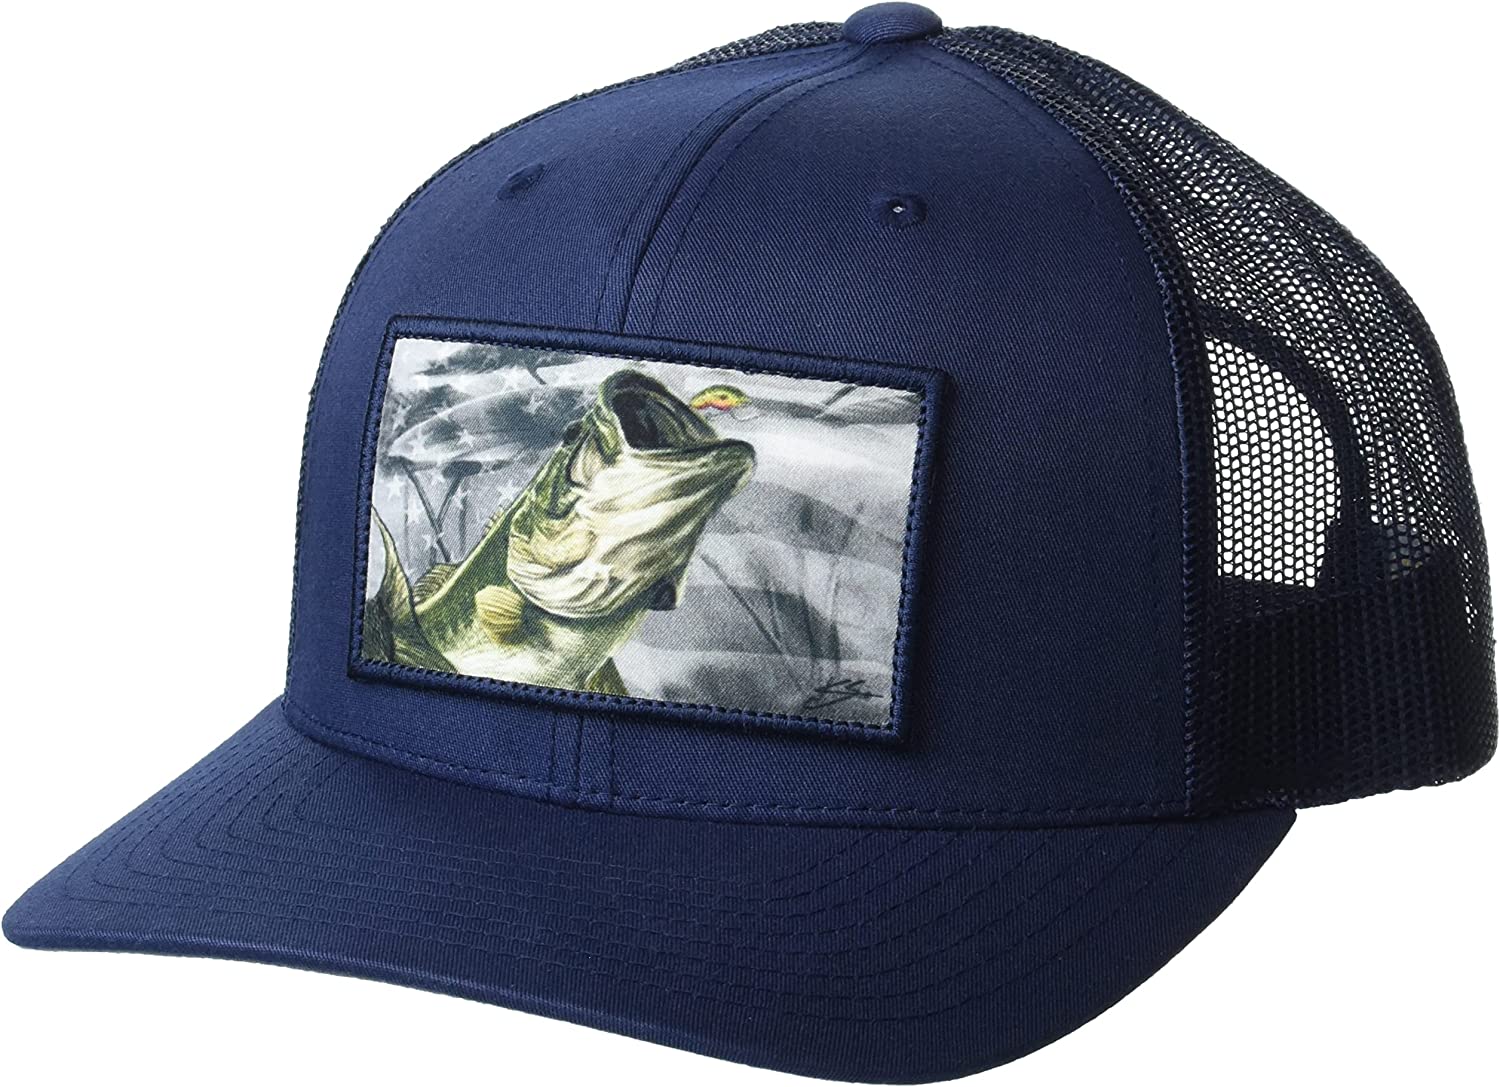 HUK Mens Mesh Trucker Snapback Hat, Anti-Glare Fishing Hat